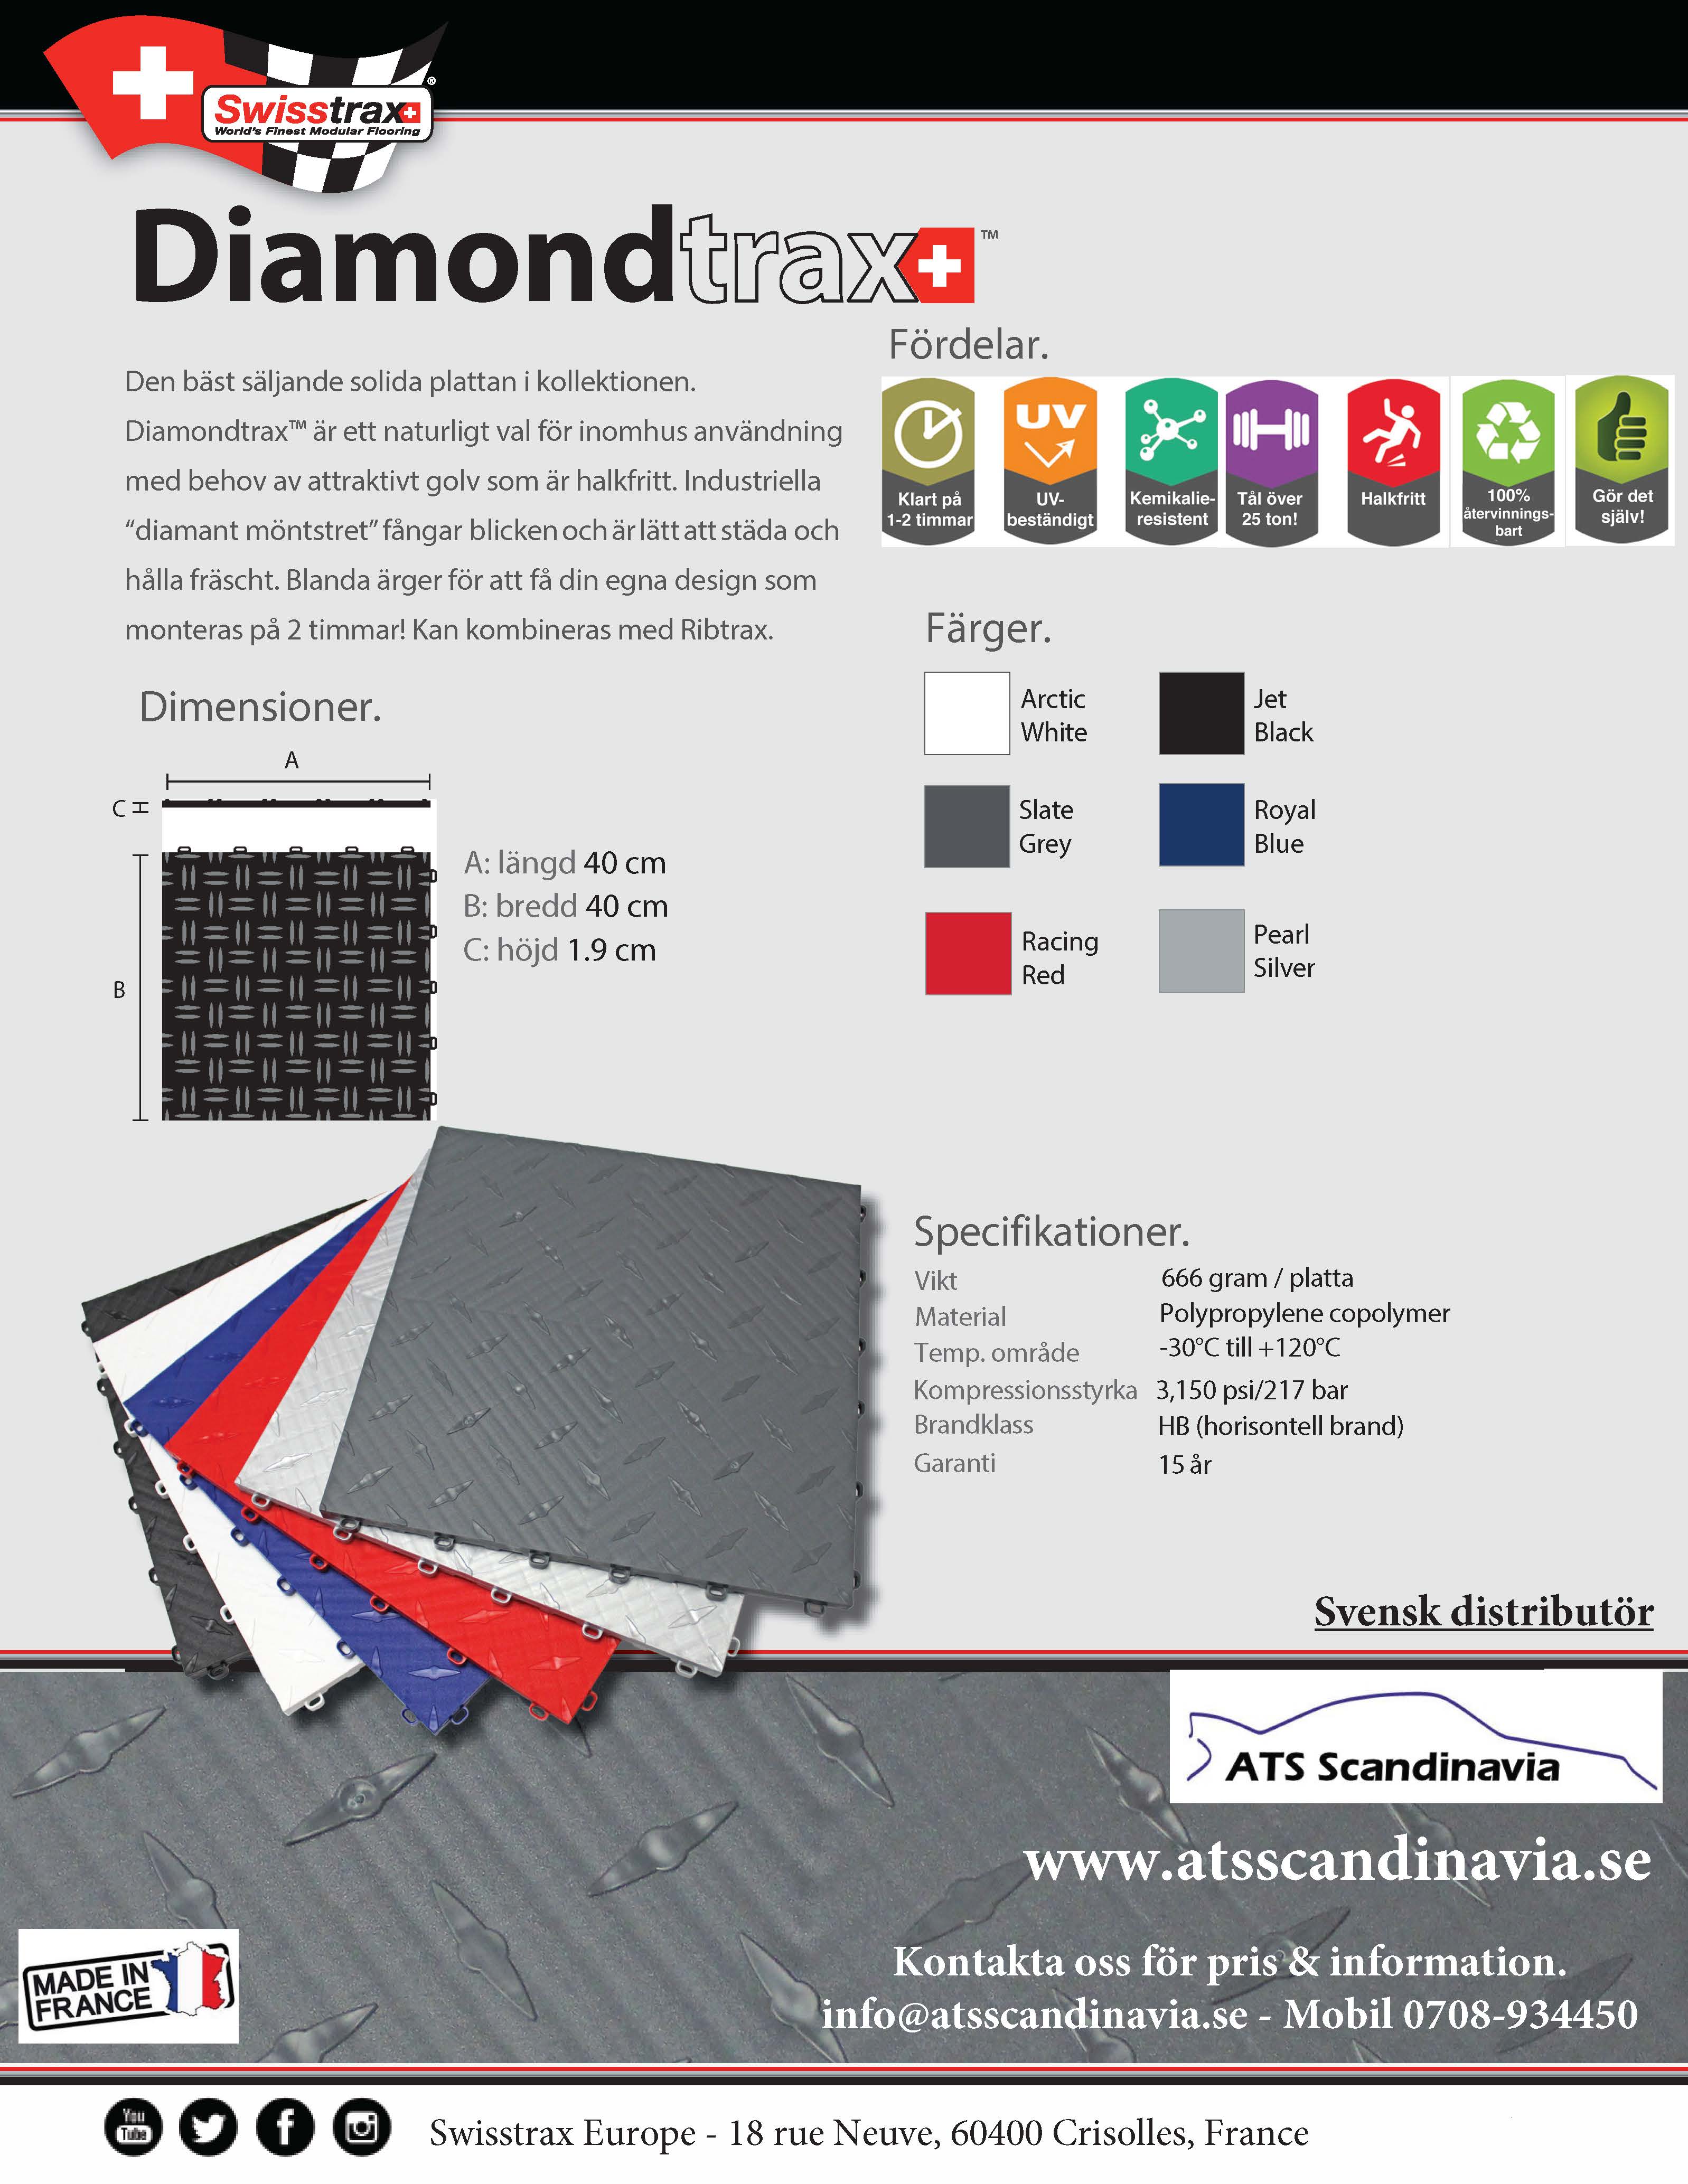 Sell Sheet_Diamondtrax Made in EU SVENSKA